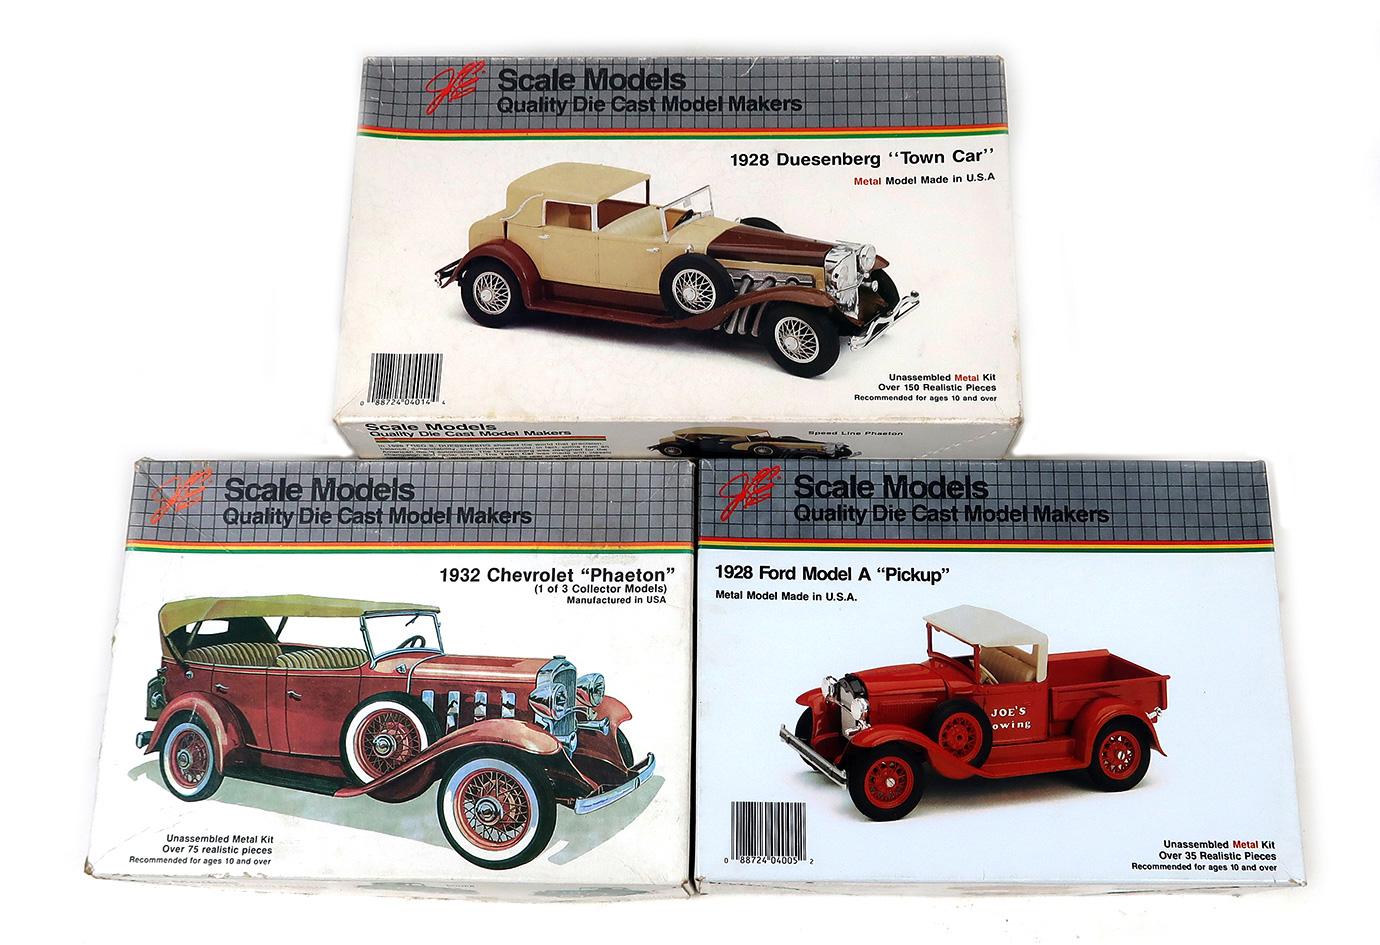 Toy Scale Models (3), Hubley, 1928 Duesenberg Town Car, 1932 Chevy Phaeton